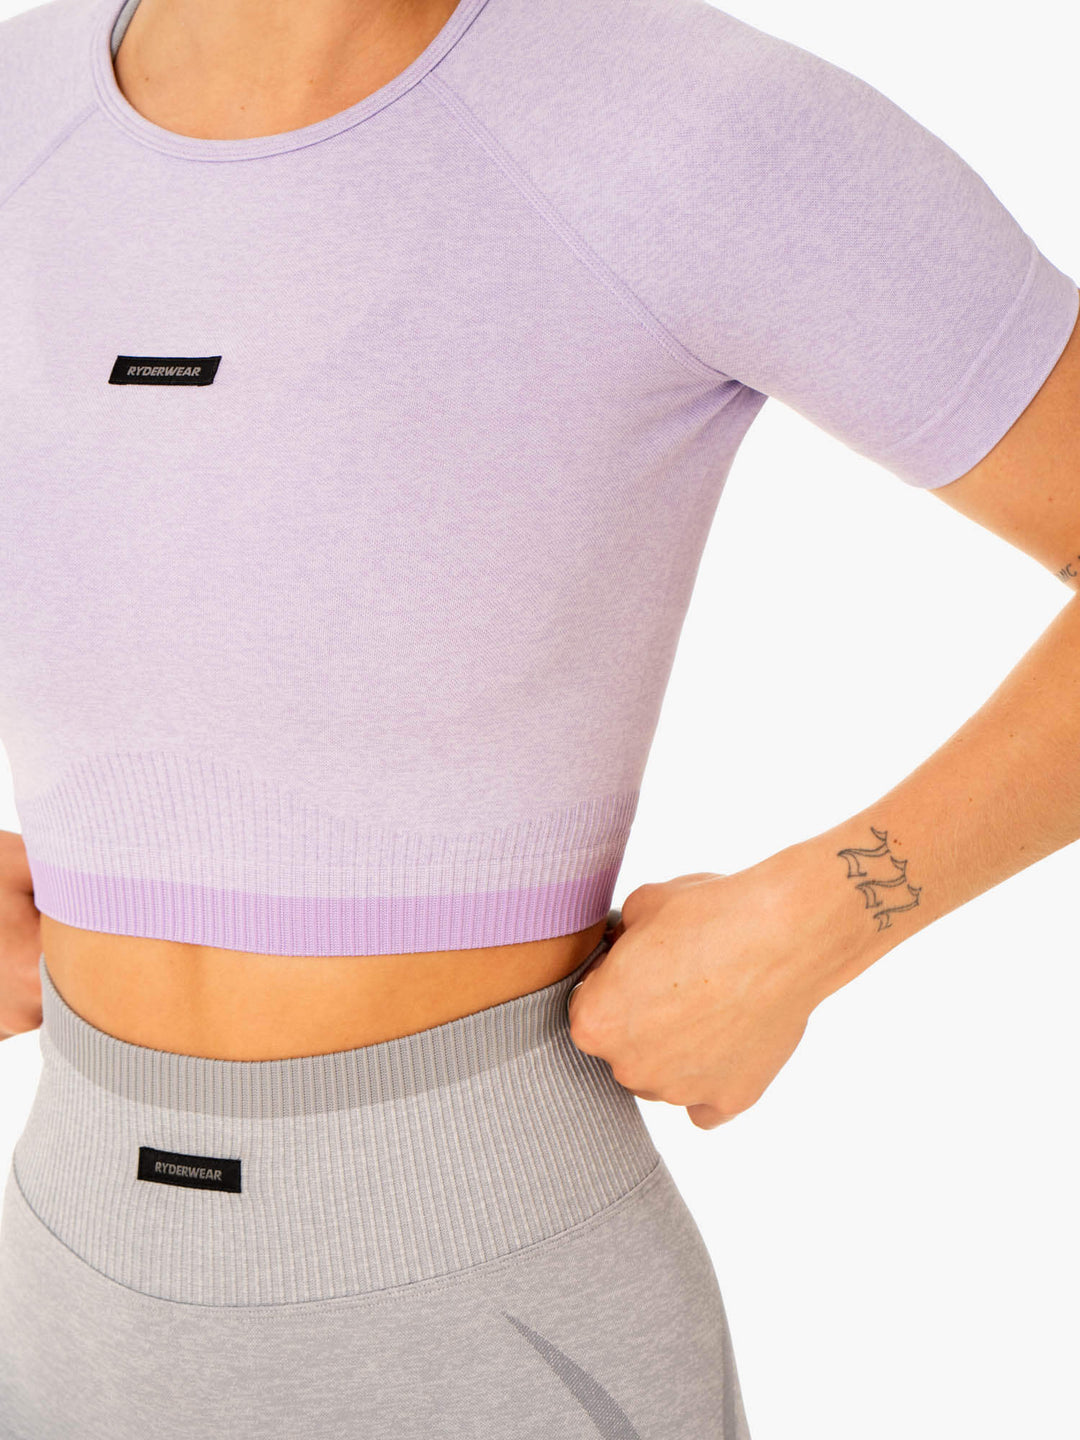 Excel Seamless T-Shirt - Lavender Marl Clothing Ryderwear 